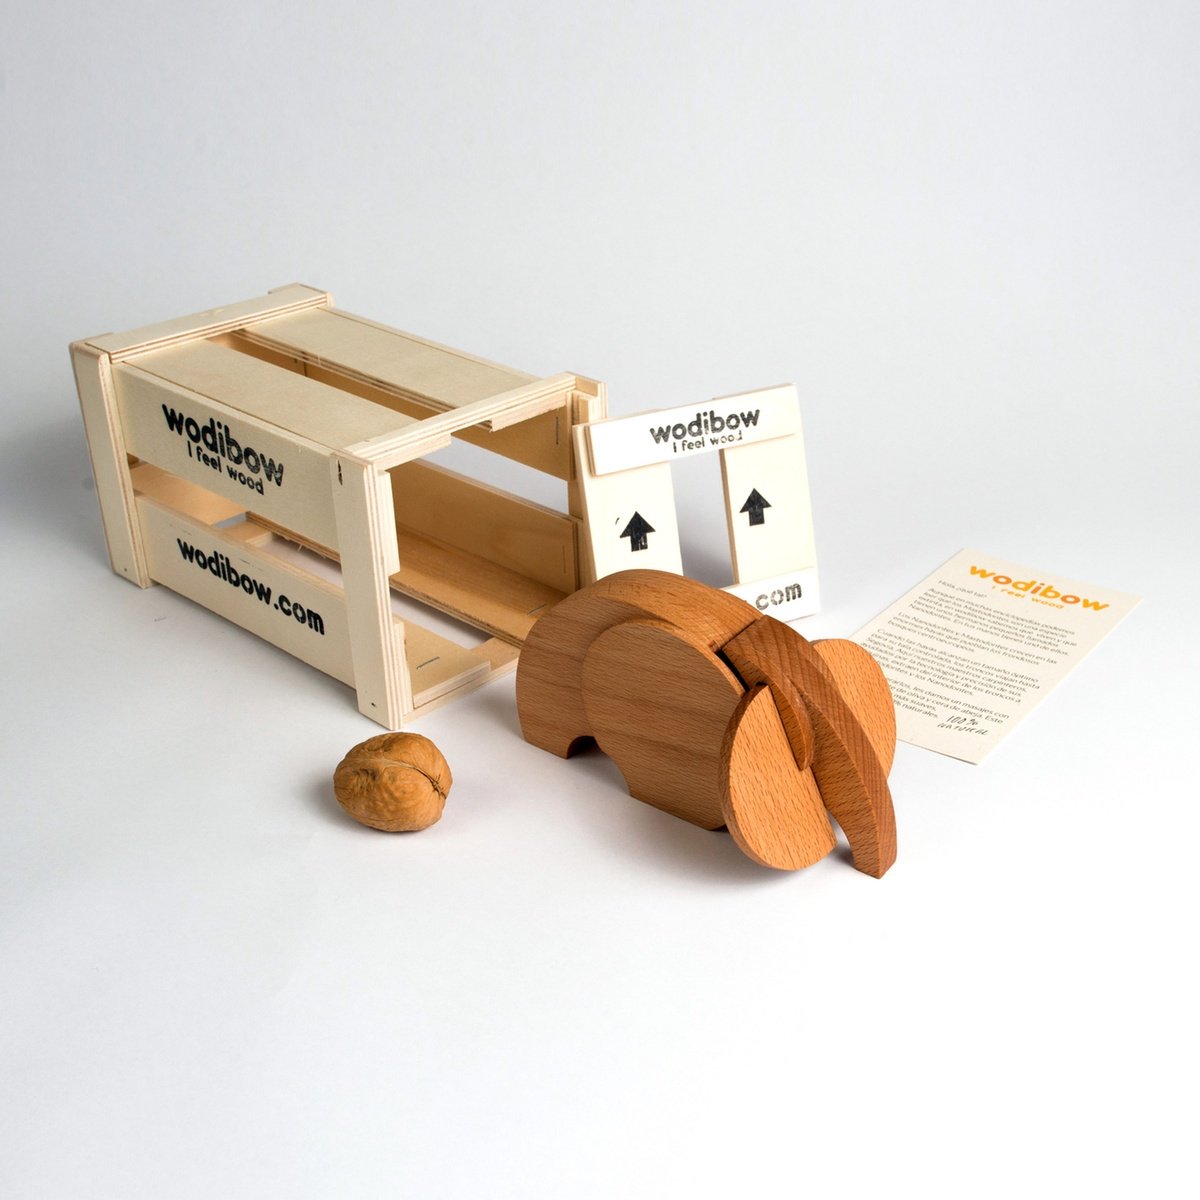 Wodibow Buchenholz-Elefant “Olaf” Spielzeug-Set 22-teilig groß (30 cm), magnetisch (ab 3 Jahren) Holzspielzeug